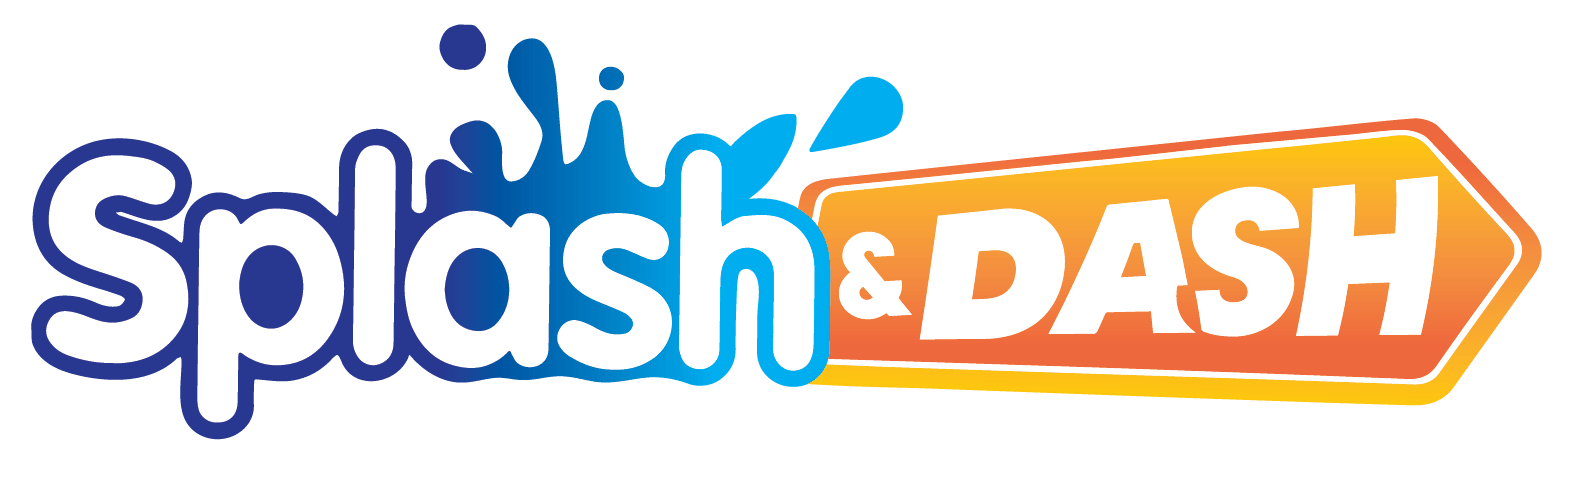 splash and dash logo - Reads Splash & Dash